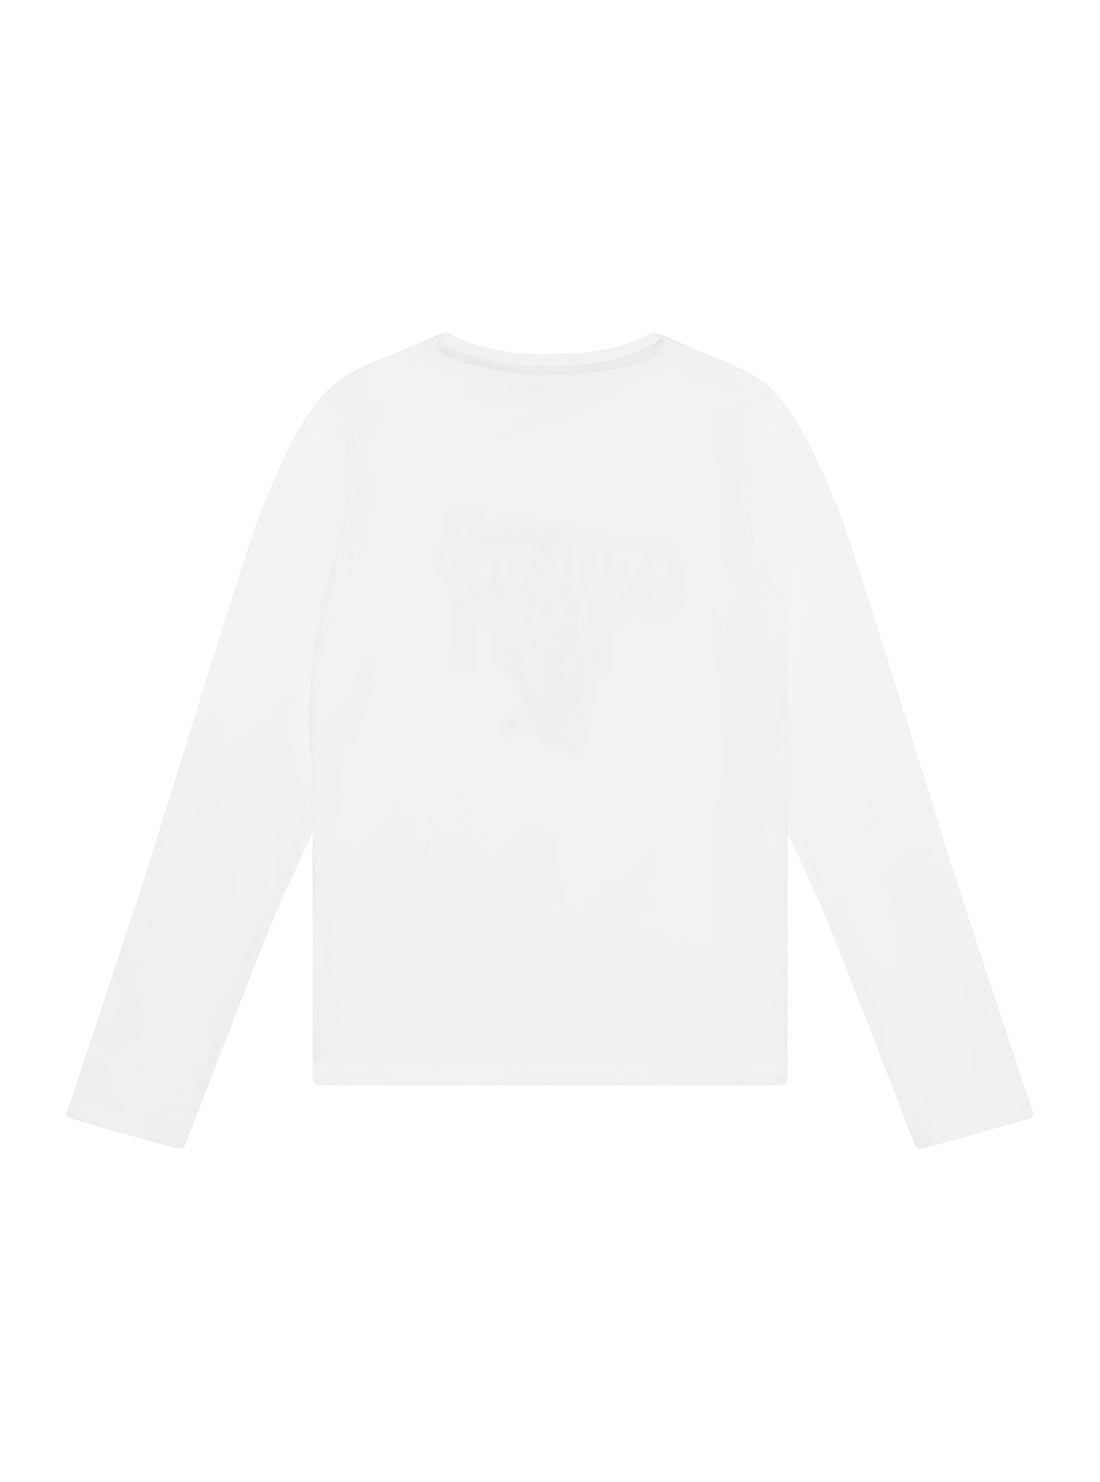 GUESS Big Boy White Graphic Logo Long Sleeve T-Shirt (7-16) L1BI20I3Z11 Back View